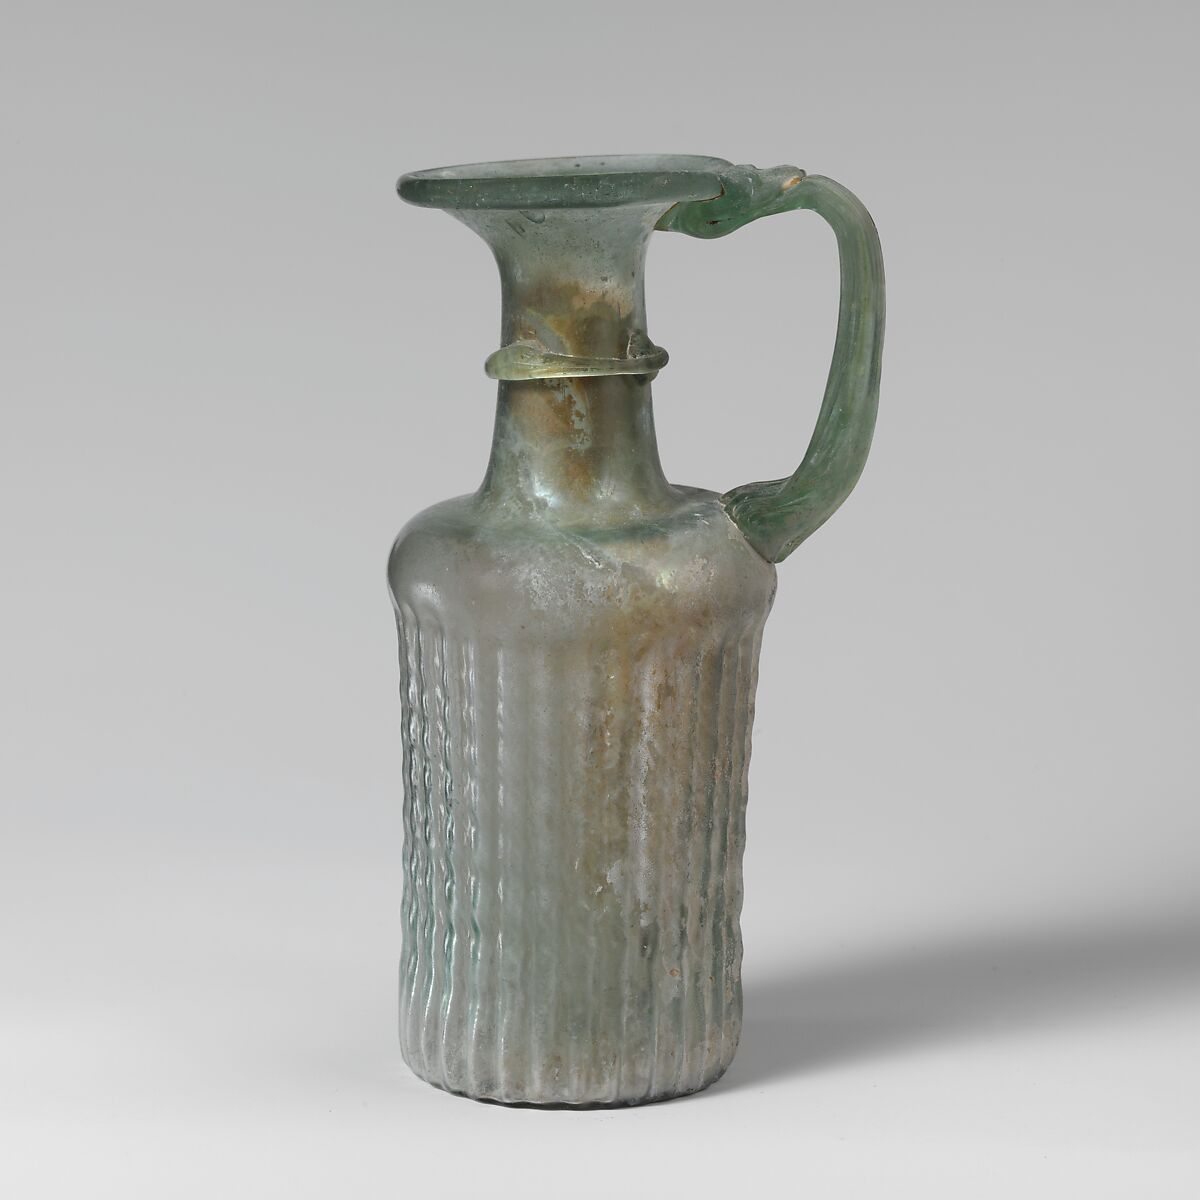 Glass jug, Glass, Roman, Syrian 